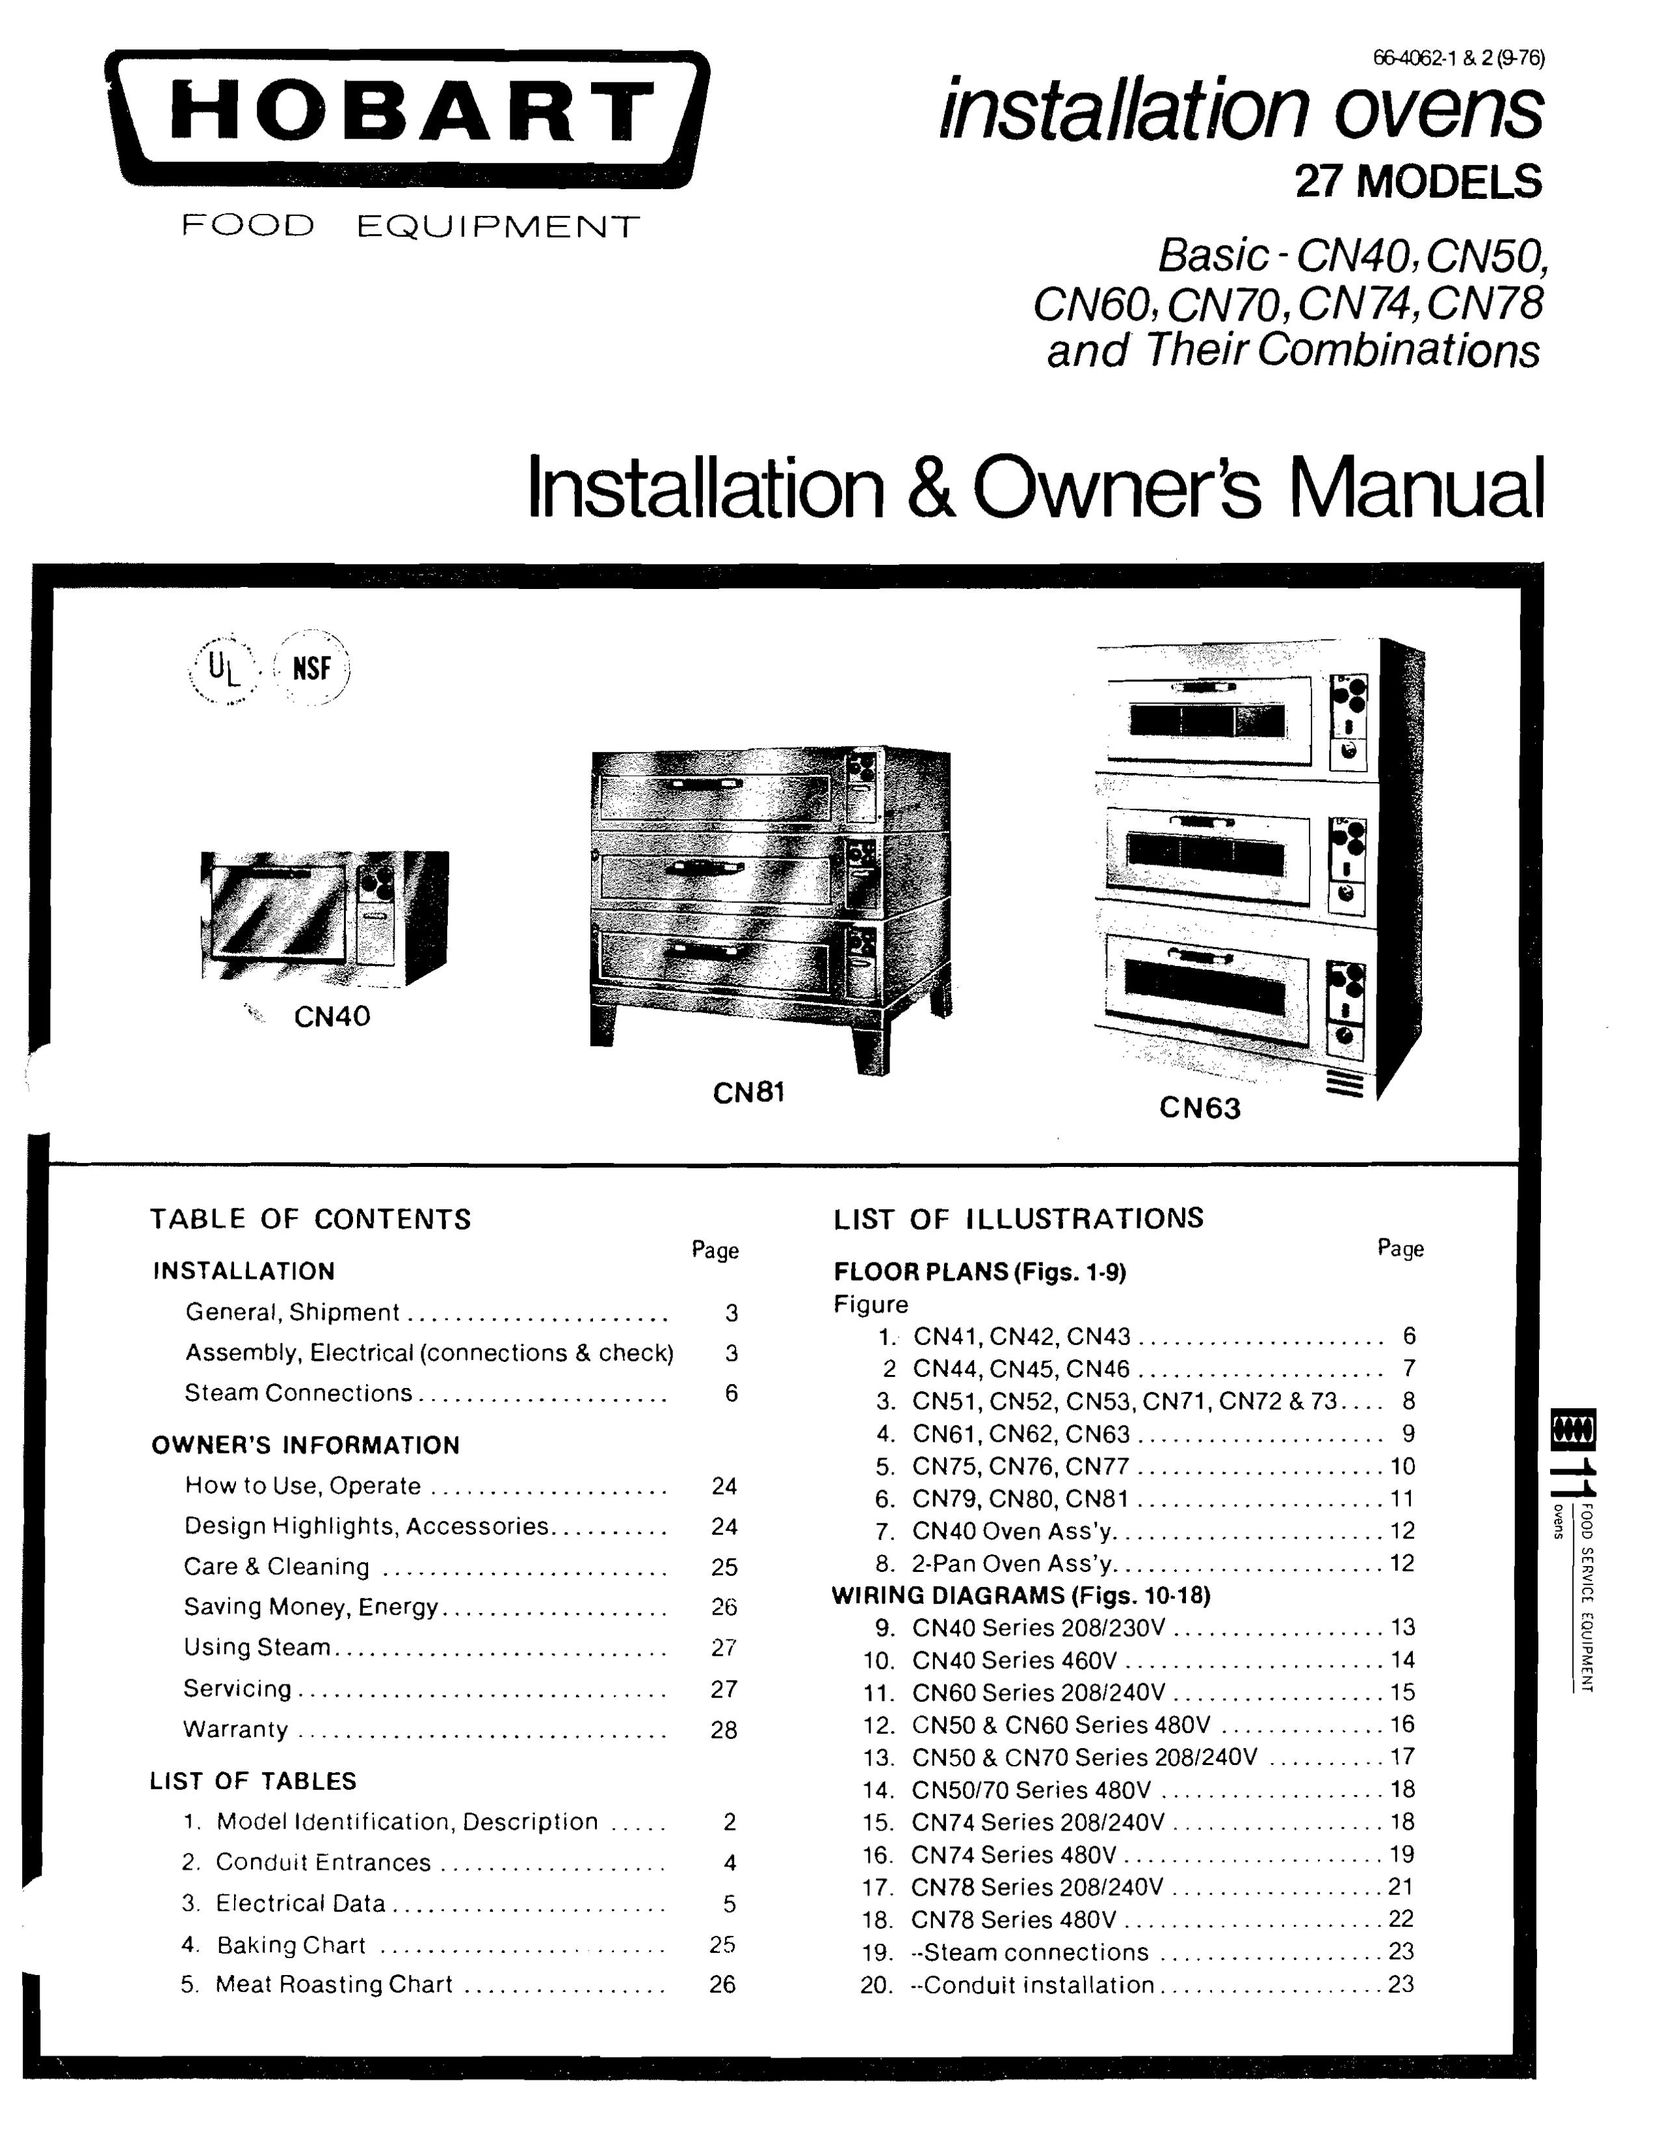 Hobart CN78 Double Oven User Manual